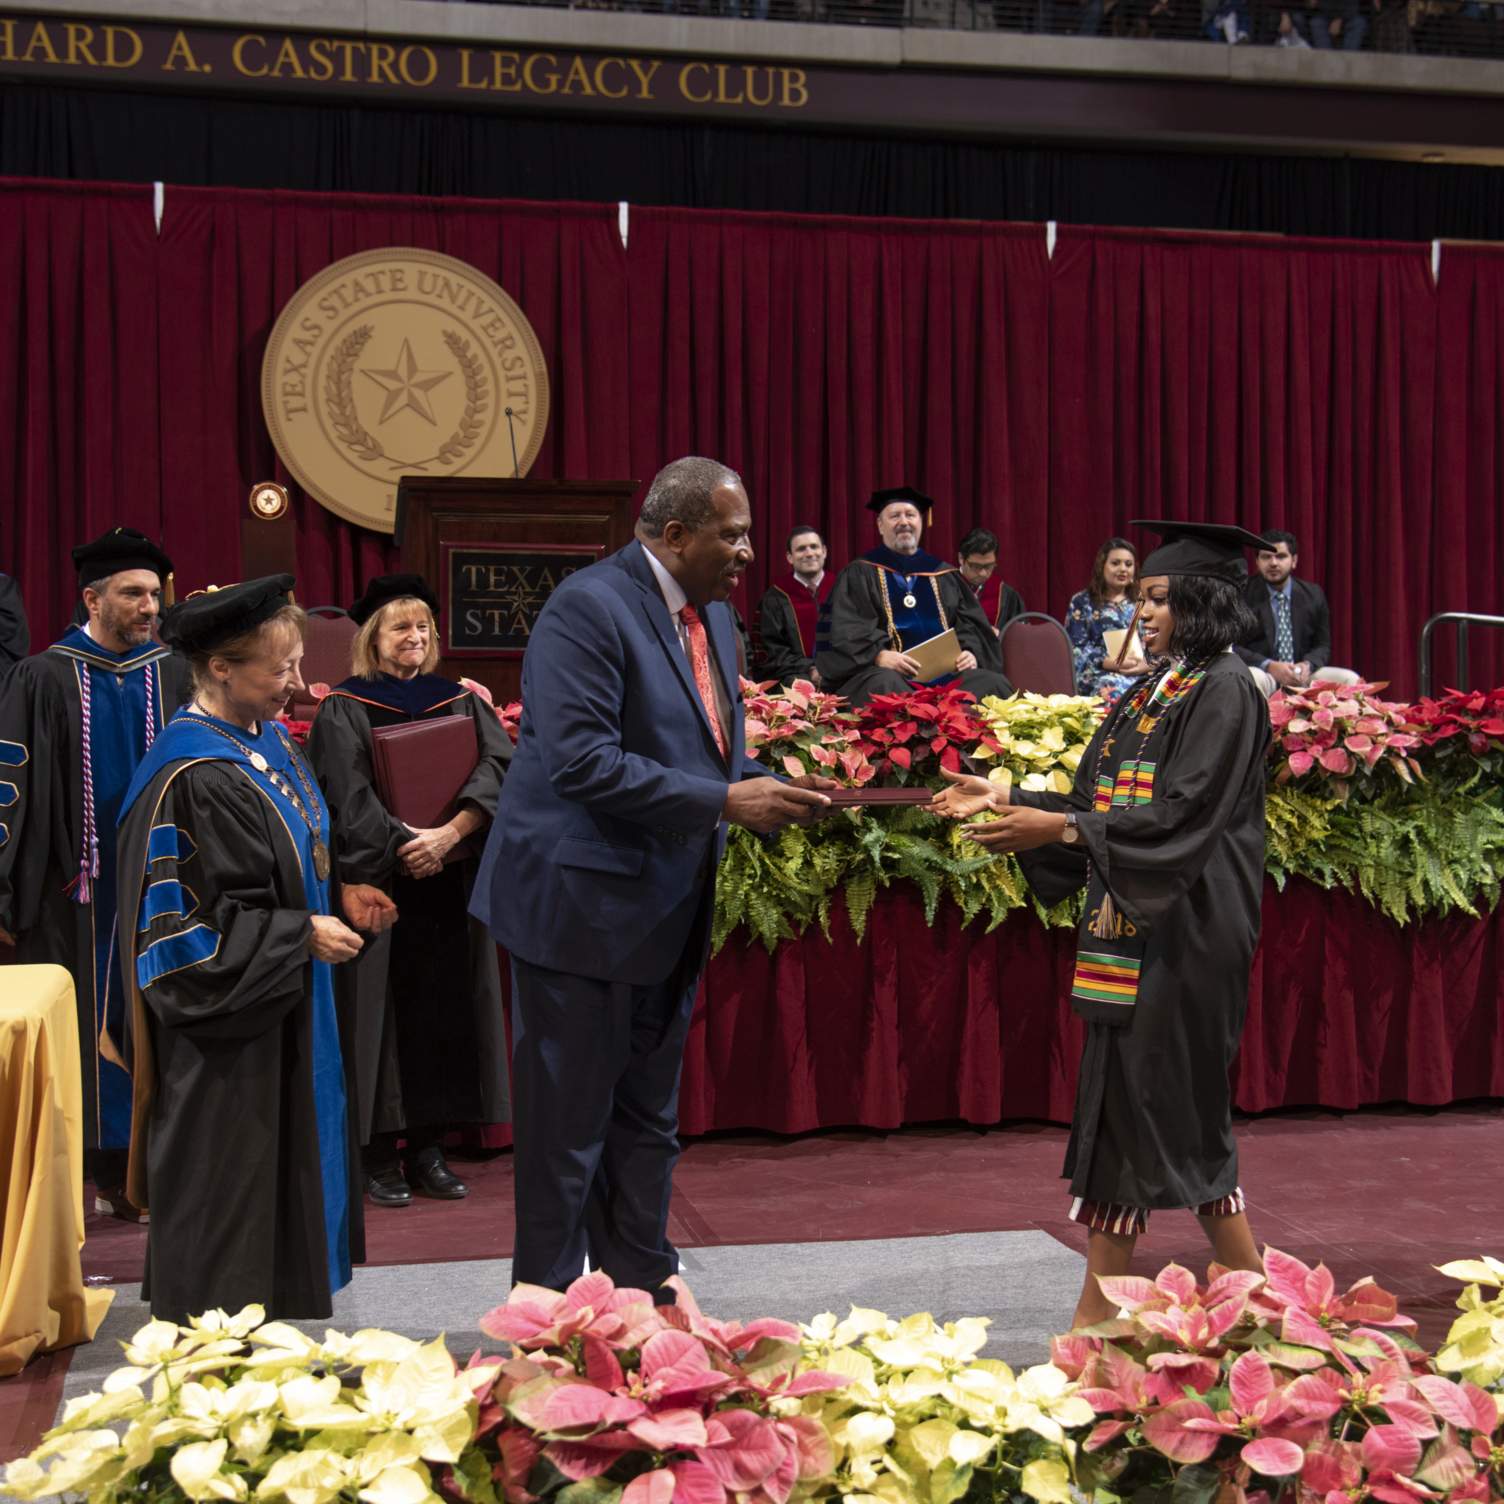 Senator West handing diploma to his niece (graduate)